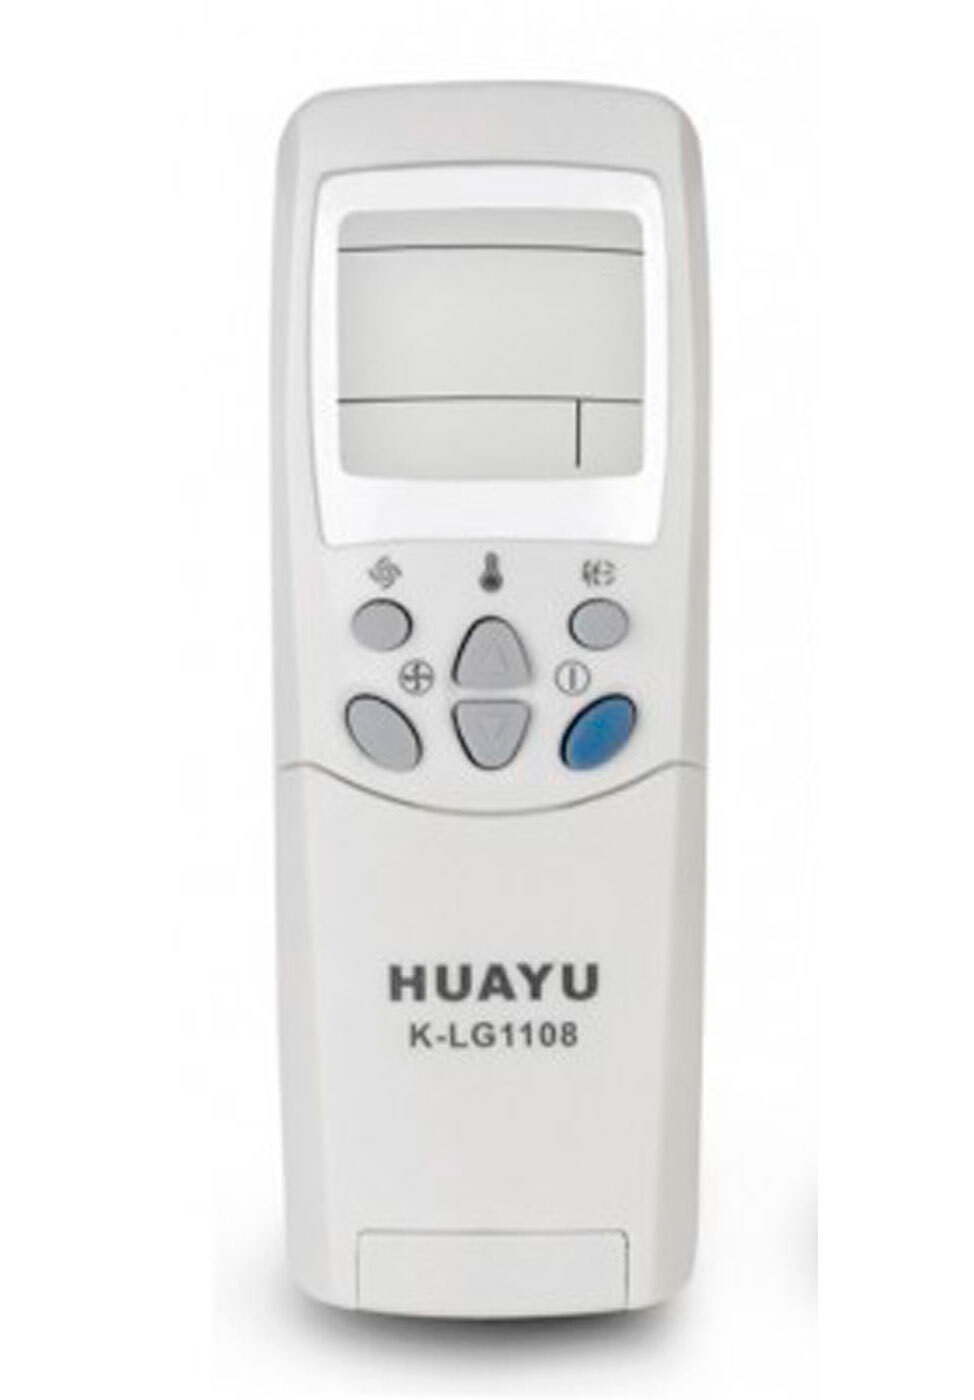 Пульт huayu для lg. Huayu k-lg1108 пульт для кондиционеров LG. Пульт Ду Huayu k-lg1108 для кондиционера. Пульт для кондиционера LG k09ehc. Пульт для кондиционера LG s07lhp.